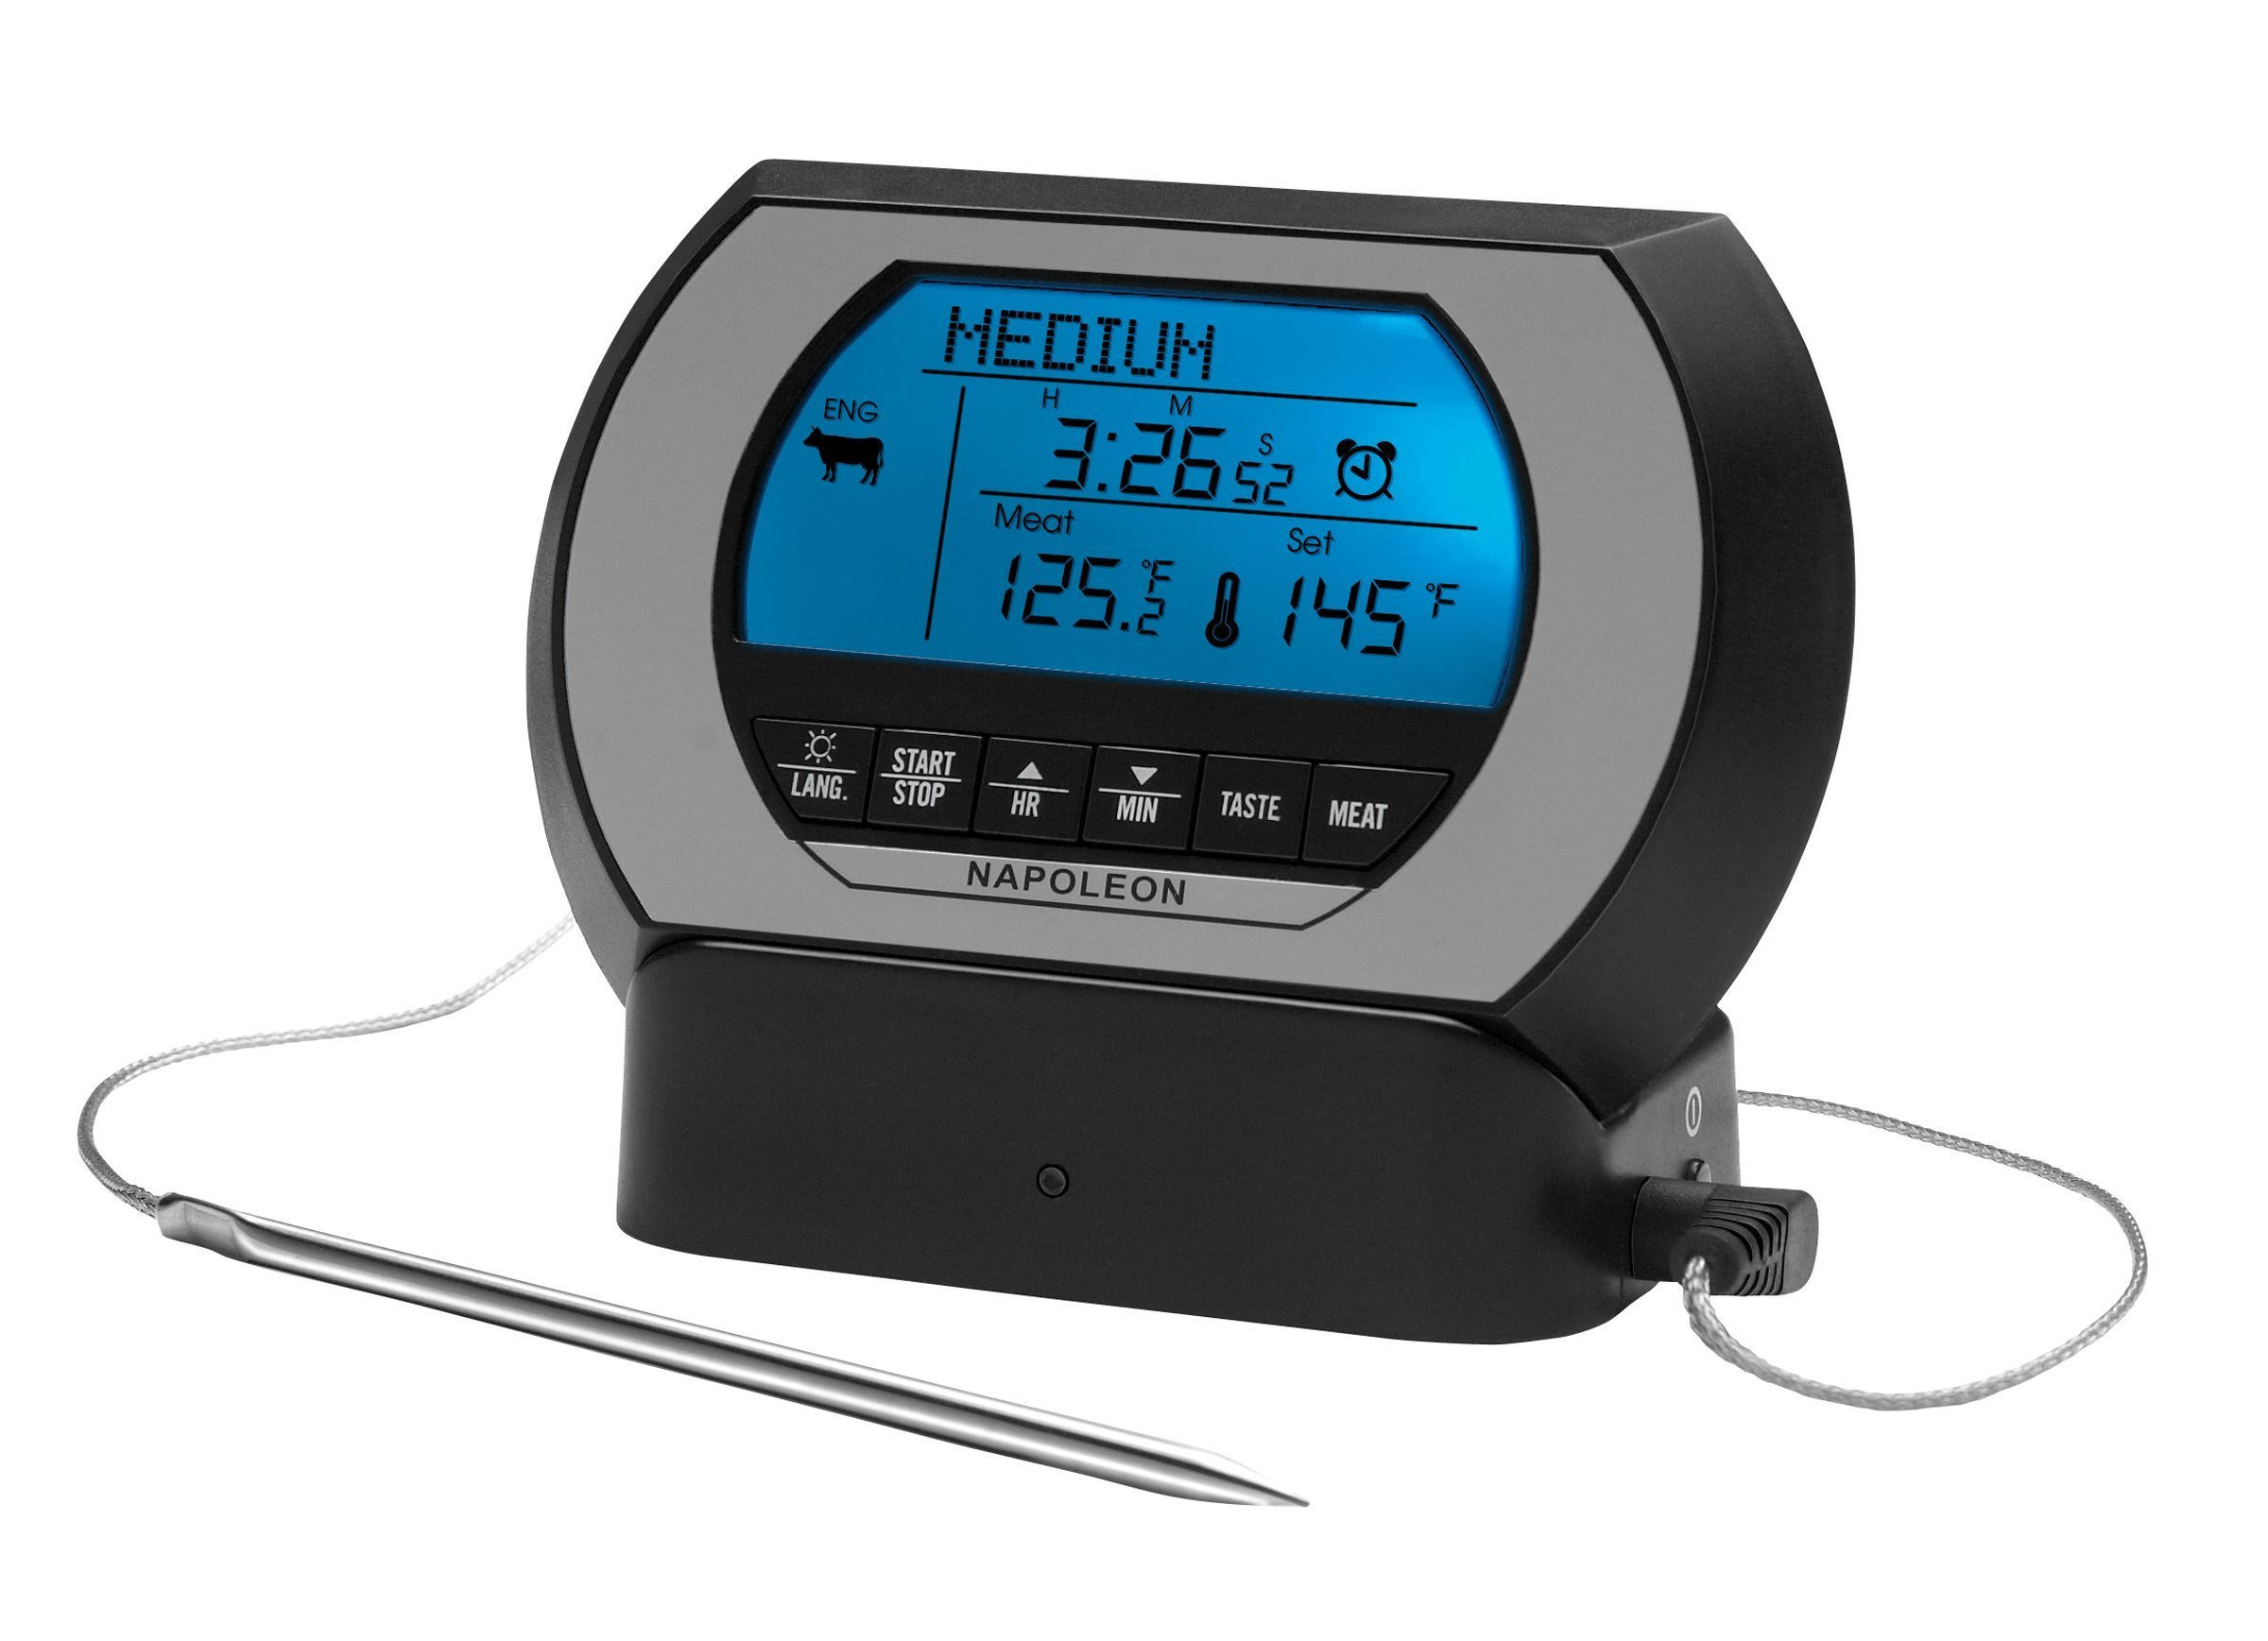 Napoleon 70006 Pro Wireless Digital Thermometer - Black